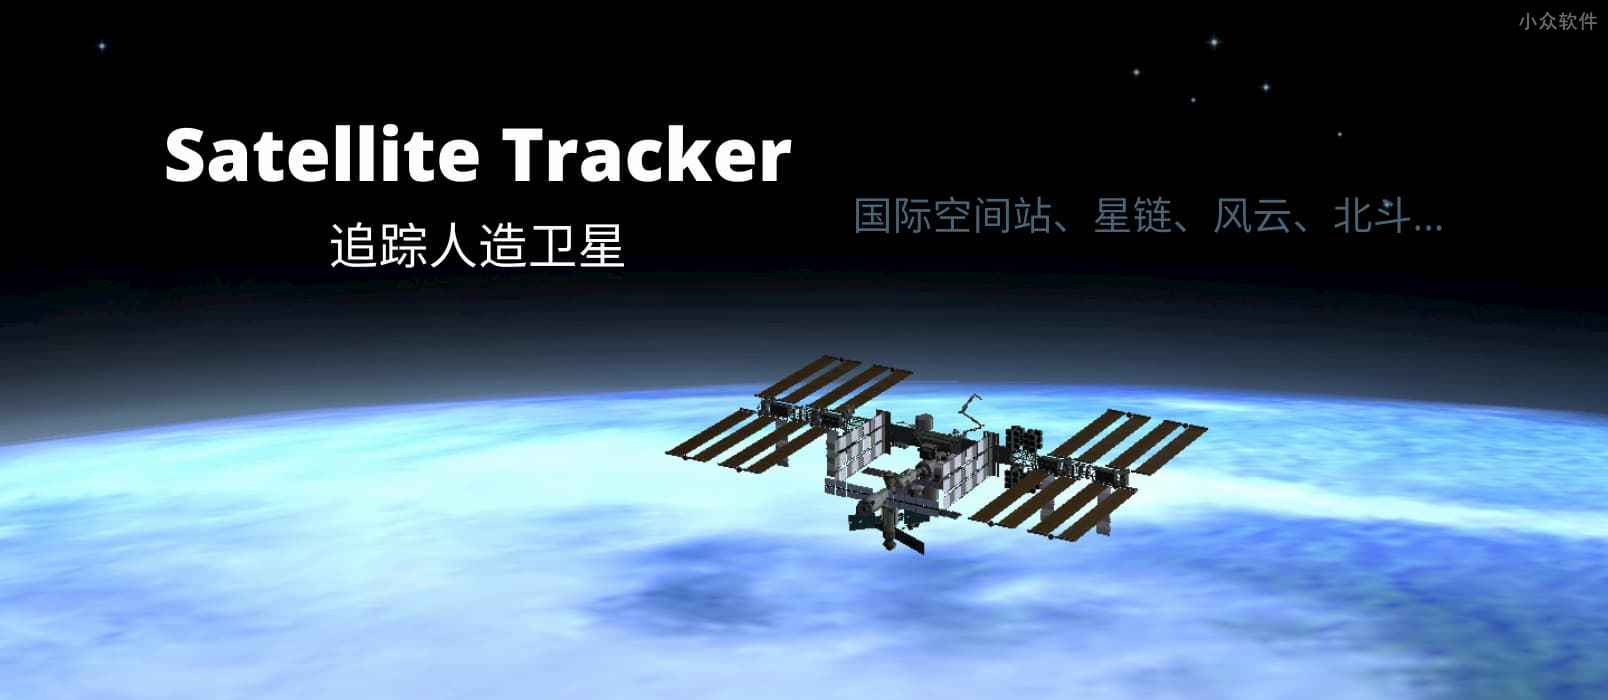 Satellite Tracker – 人造卫星观测指南，实时追踪国际空间站、星链（Starlink）、风云系列卫星、北斗卫星